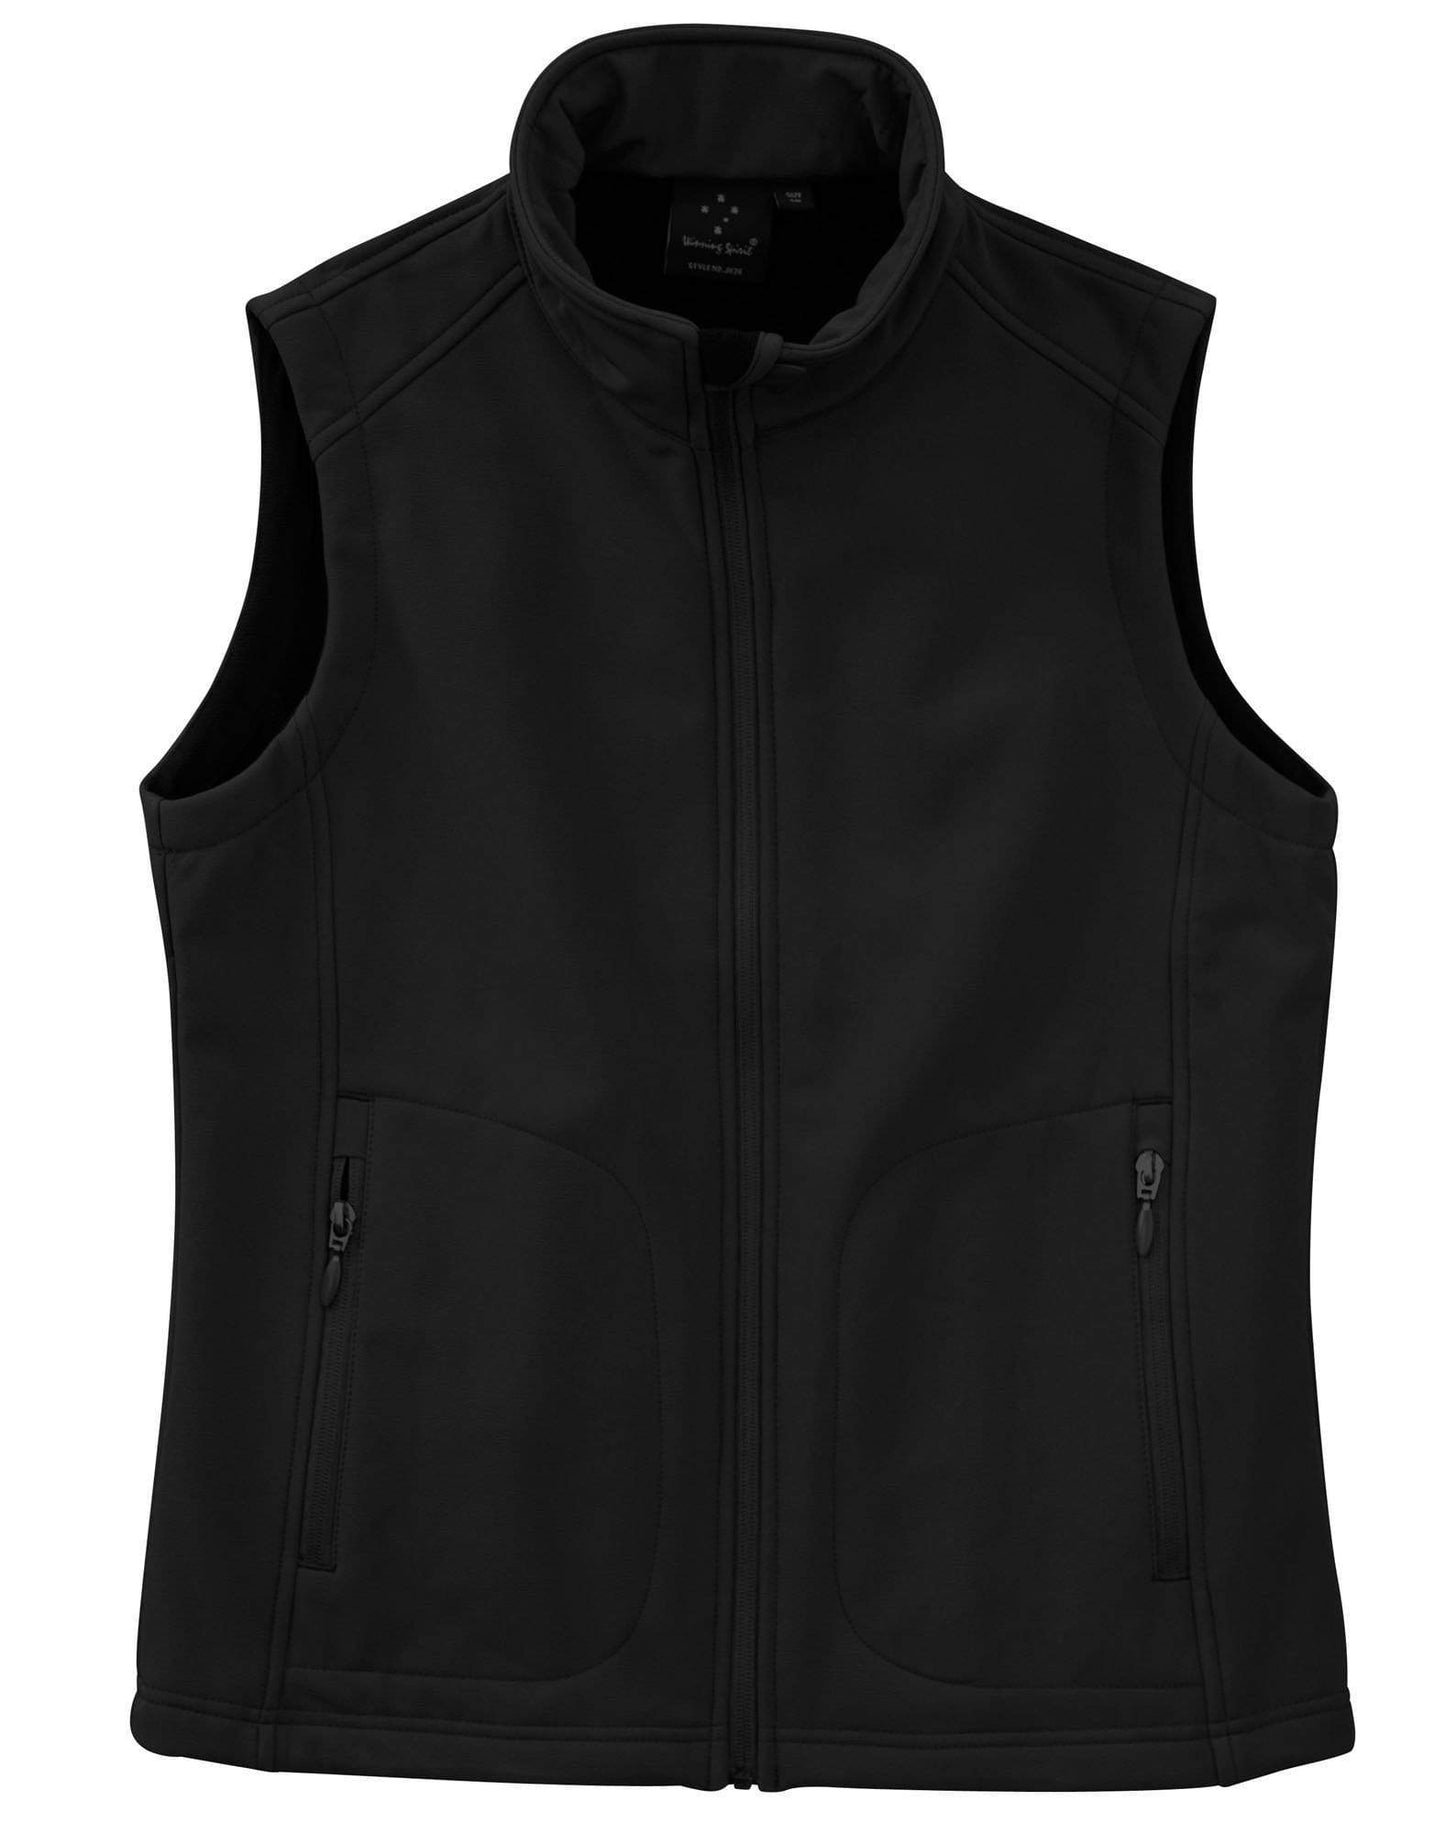 WINNING SPIRIT Softshell Vest Ladies' JK26 Casual Wear Winning Spirit Black 8 